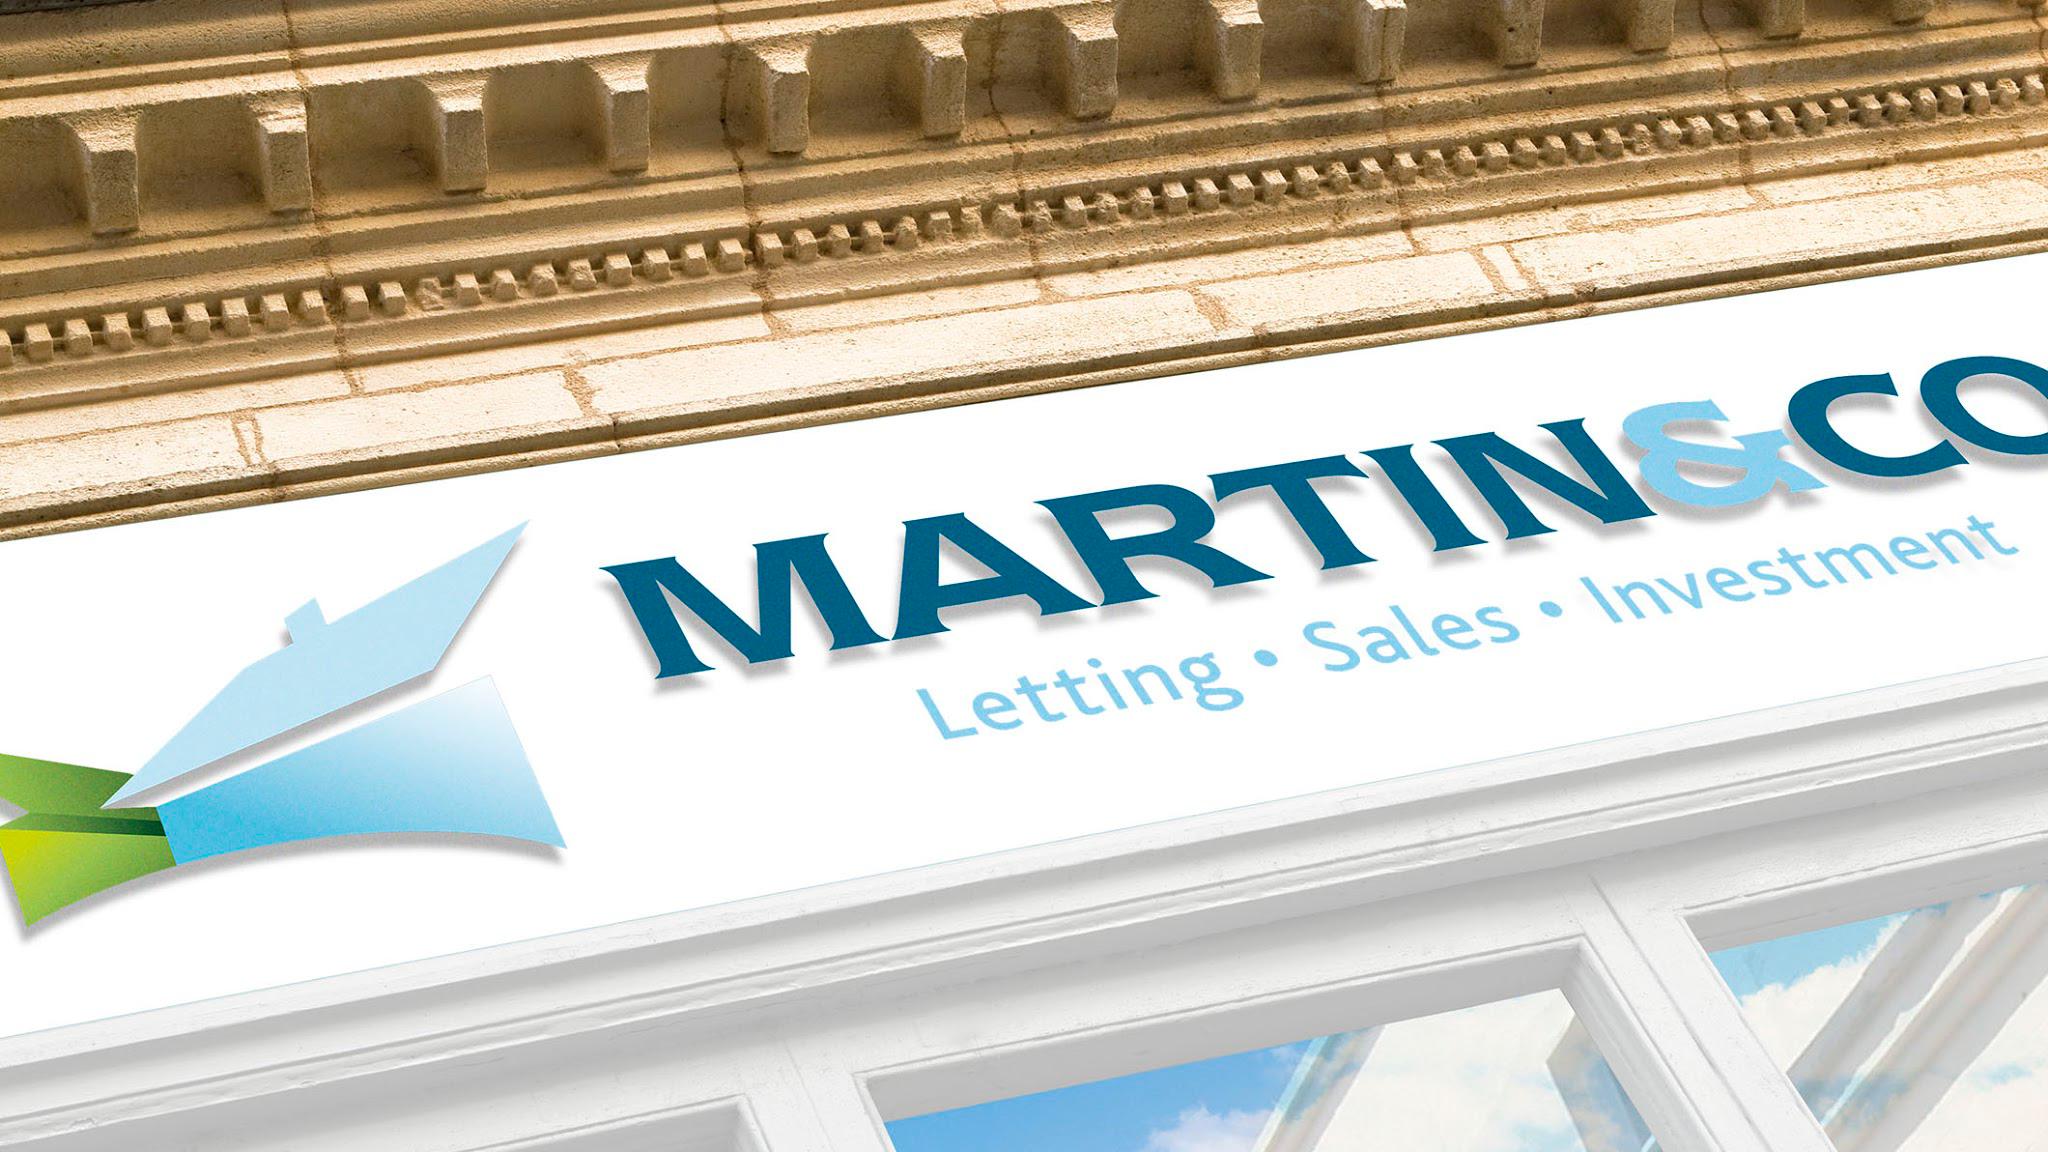 Martin & Co Reading Lettings & Estate Agents - Reading, Berkshire RG2 0EG - 01189 312179 | ShowMeLocal.com